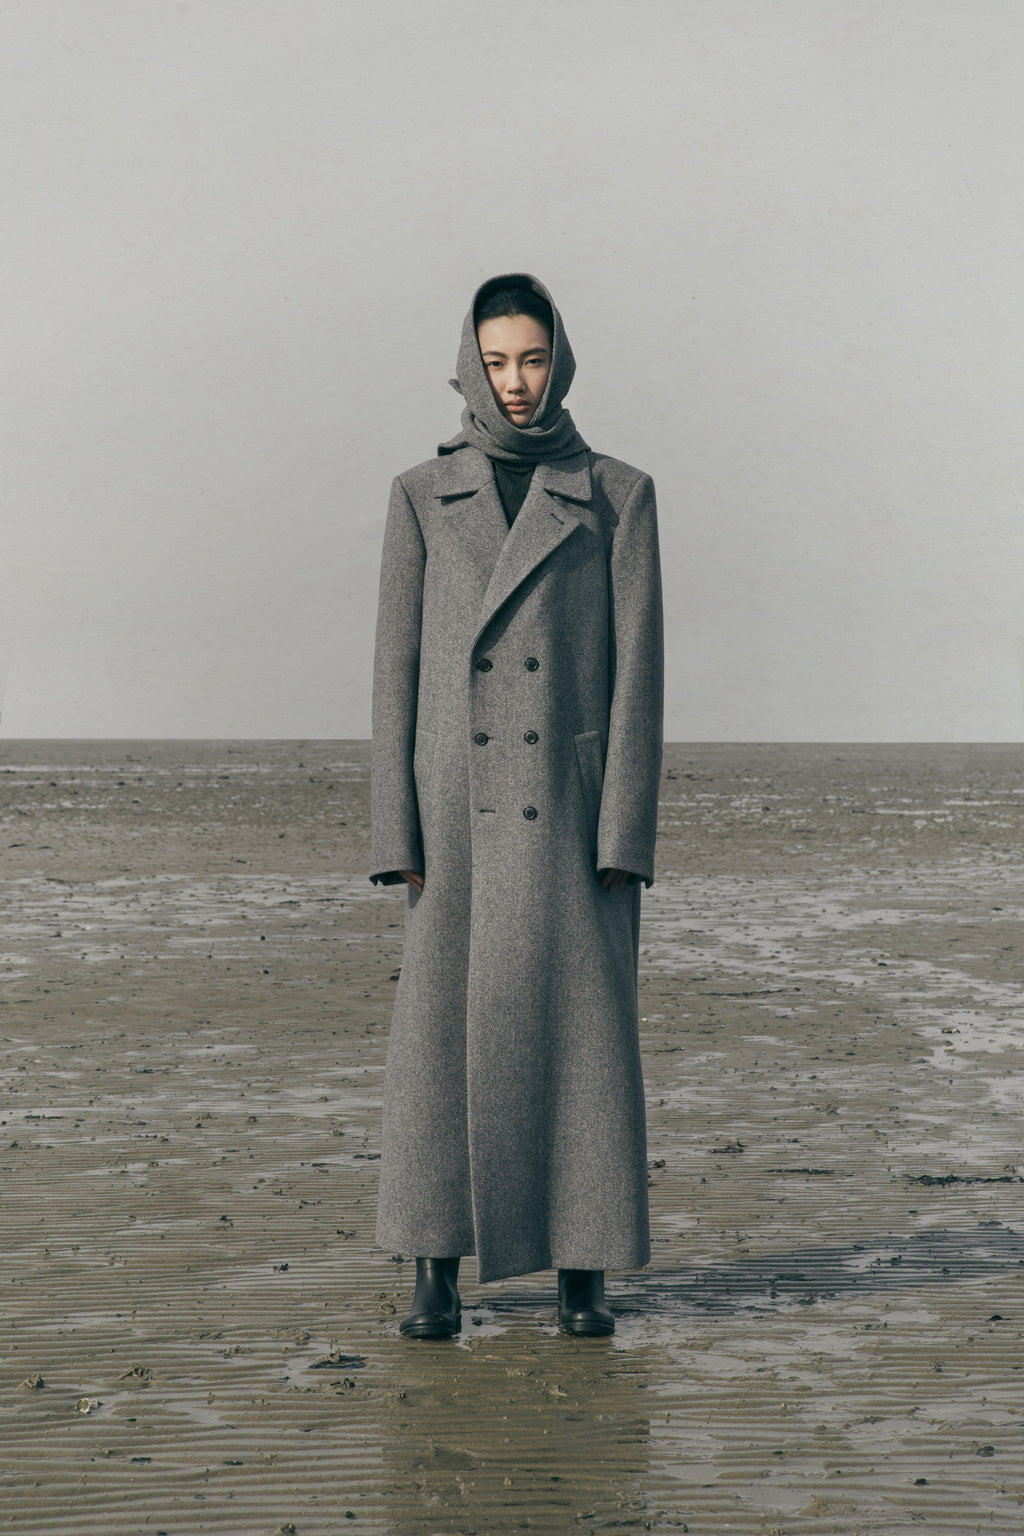 Laurence coat | Grey Melange - Recycled wool blend